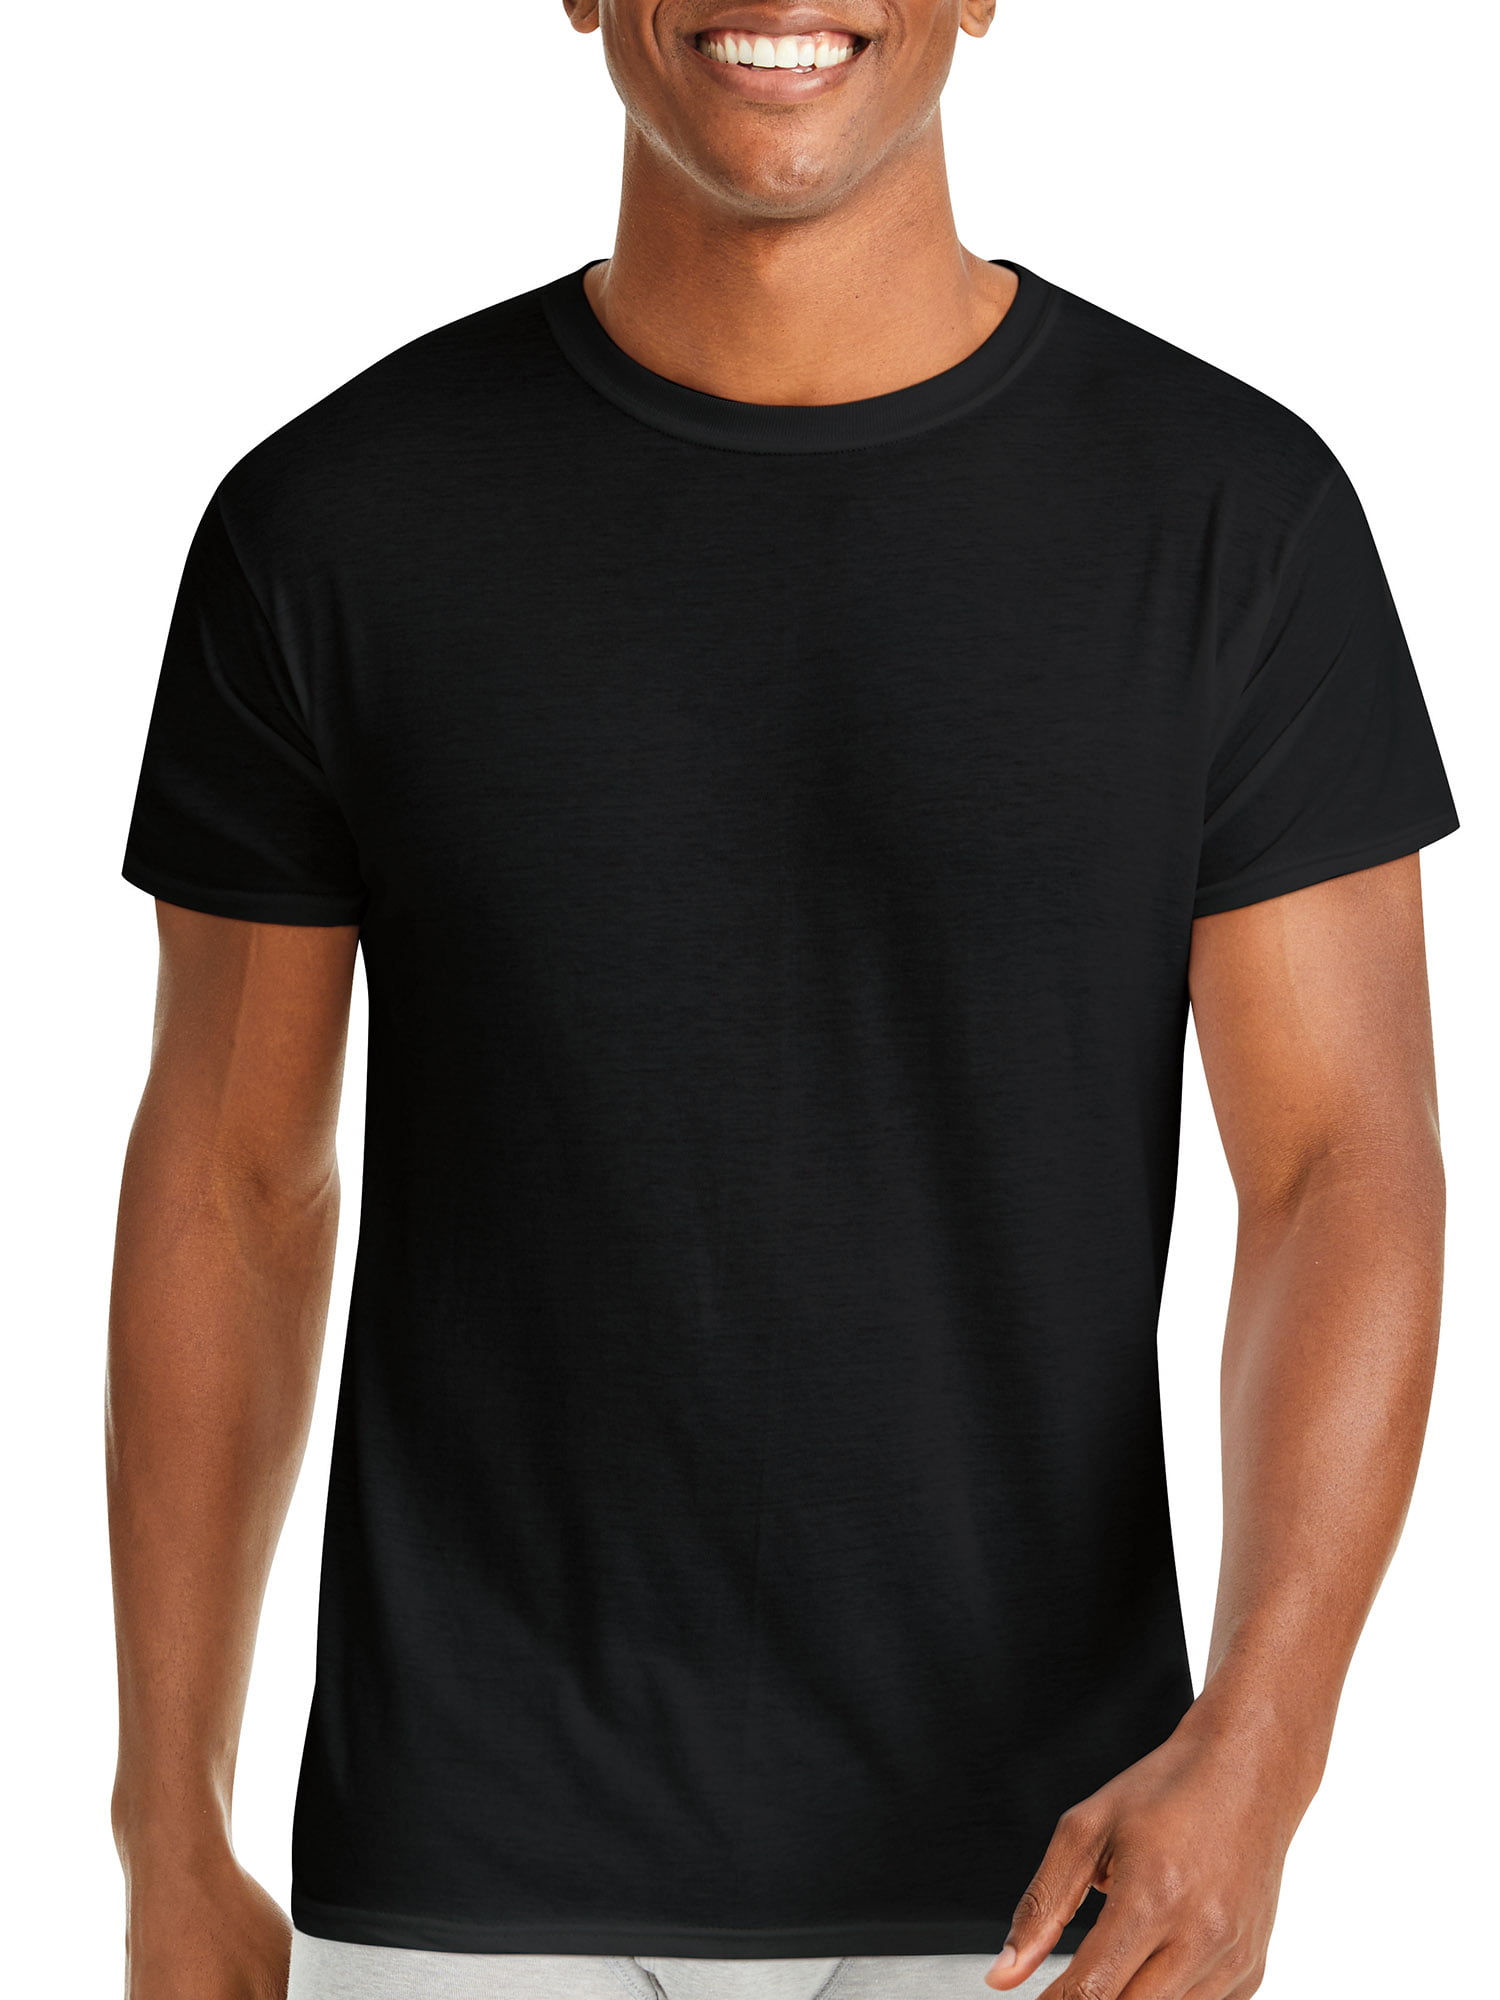 Hanes - Men's Tagless ComfortSoft White Crewneck T-Shirts, 6 Pack